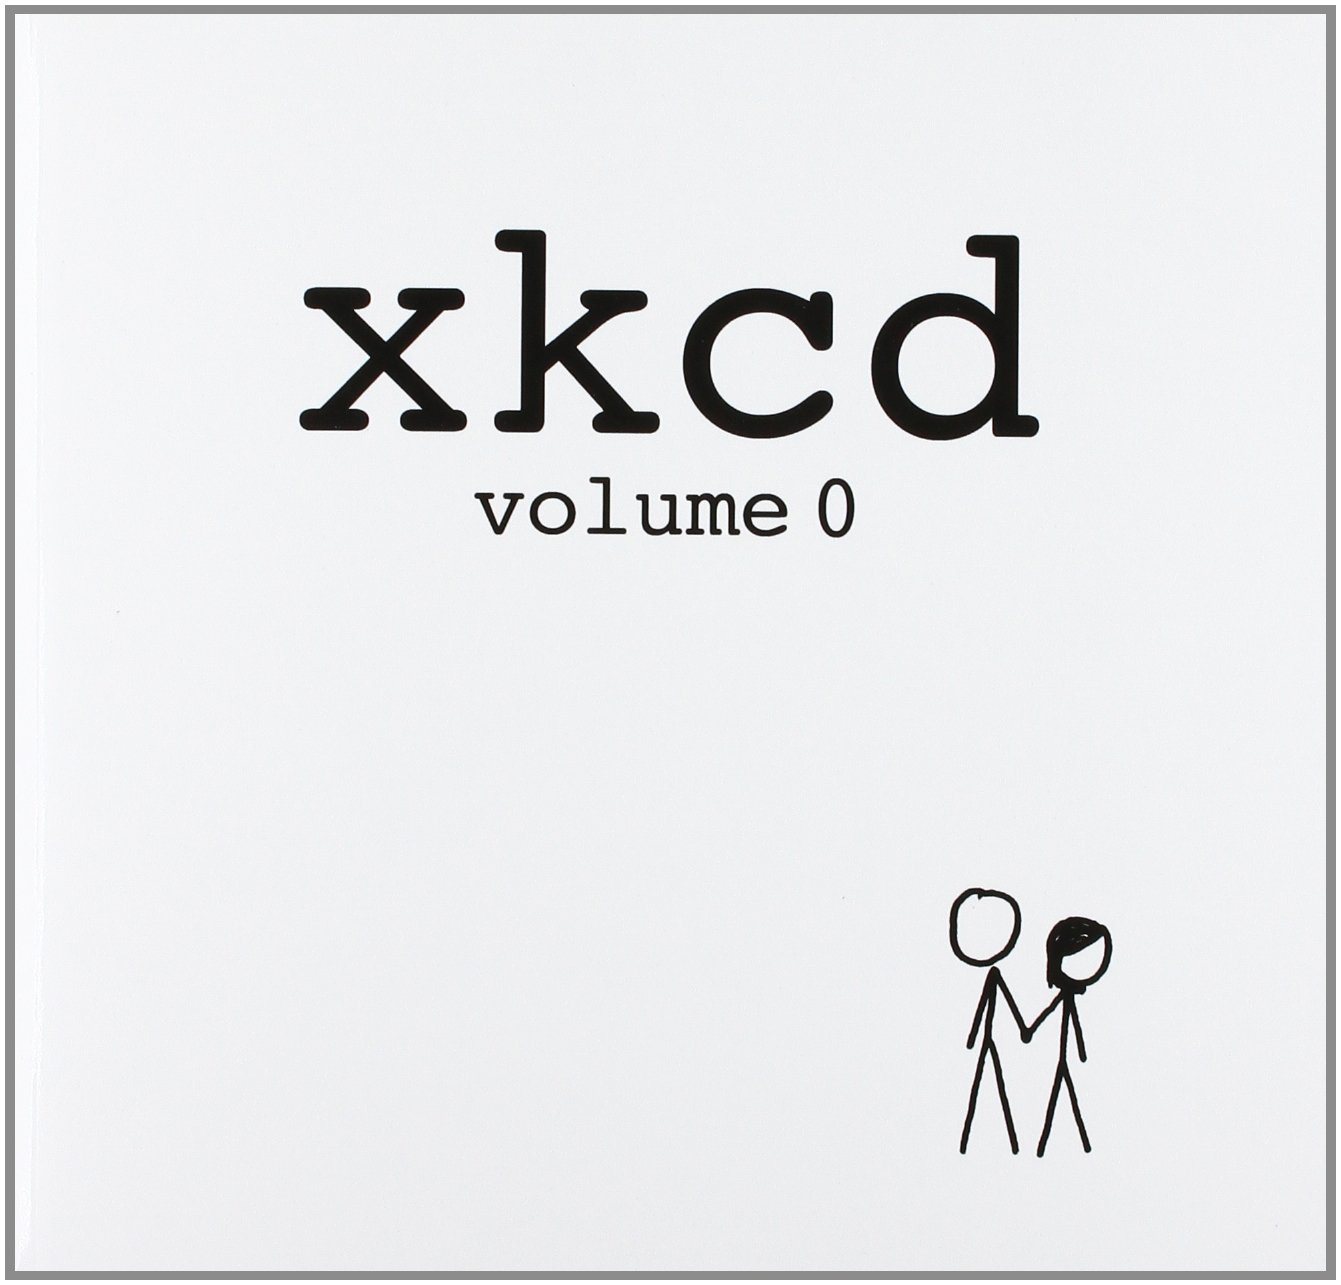 XKCD Volume 0